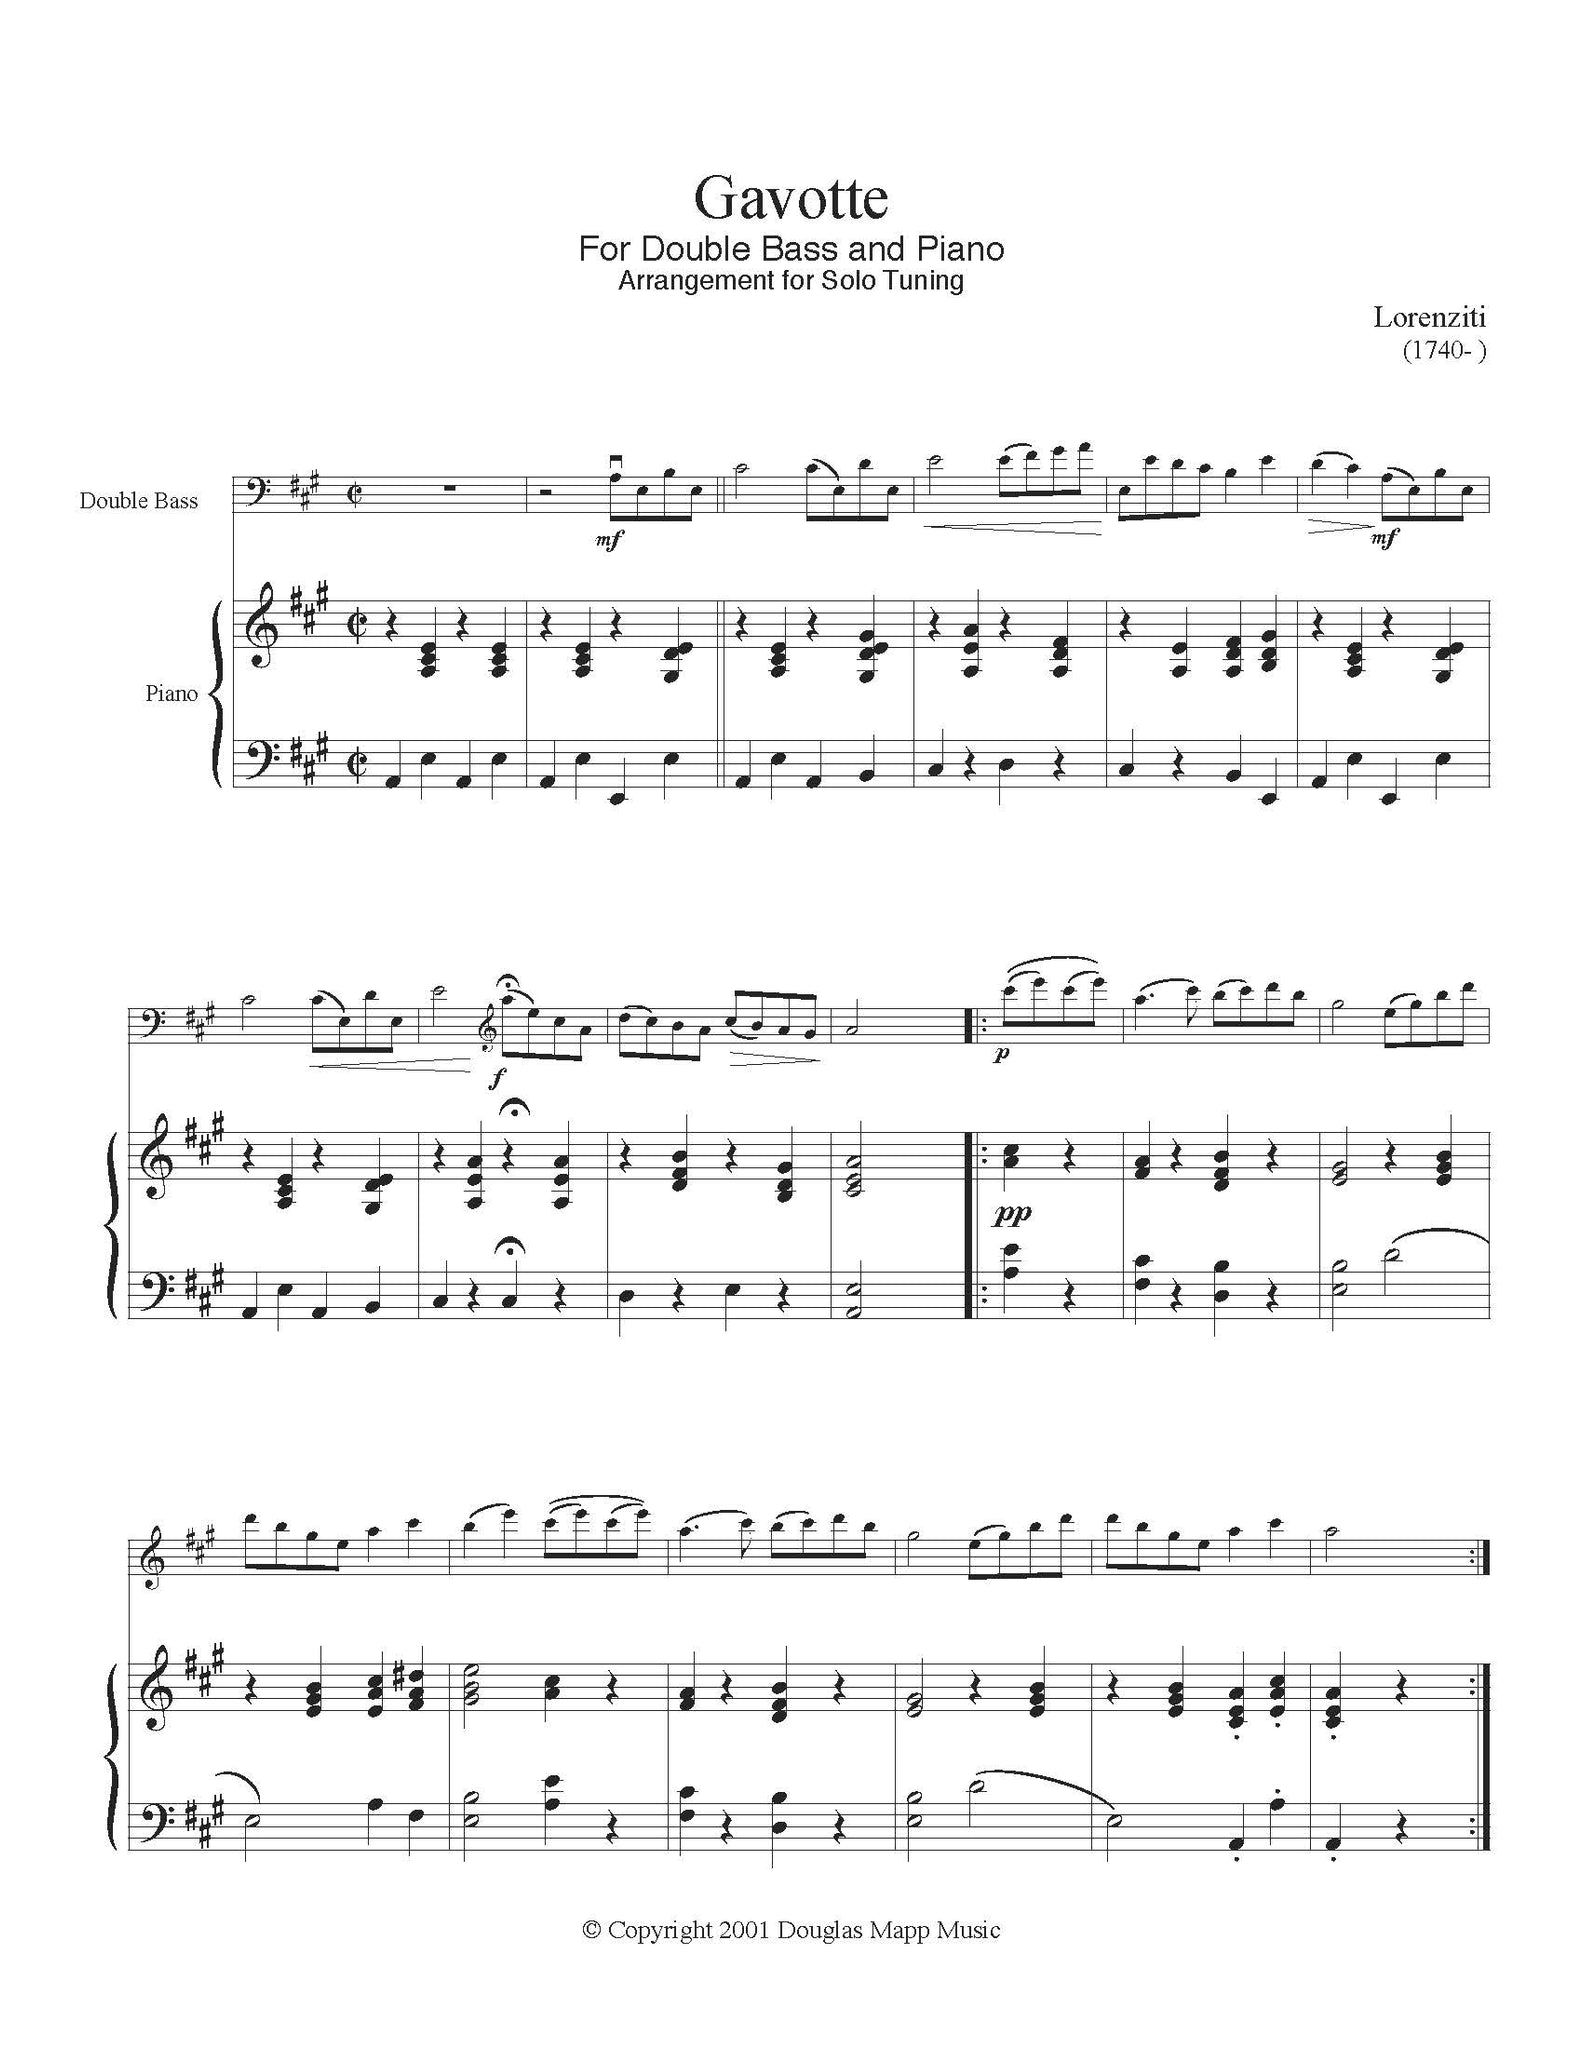 Lorenzitti Gavotte solo tuning page 1